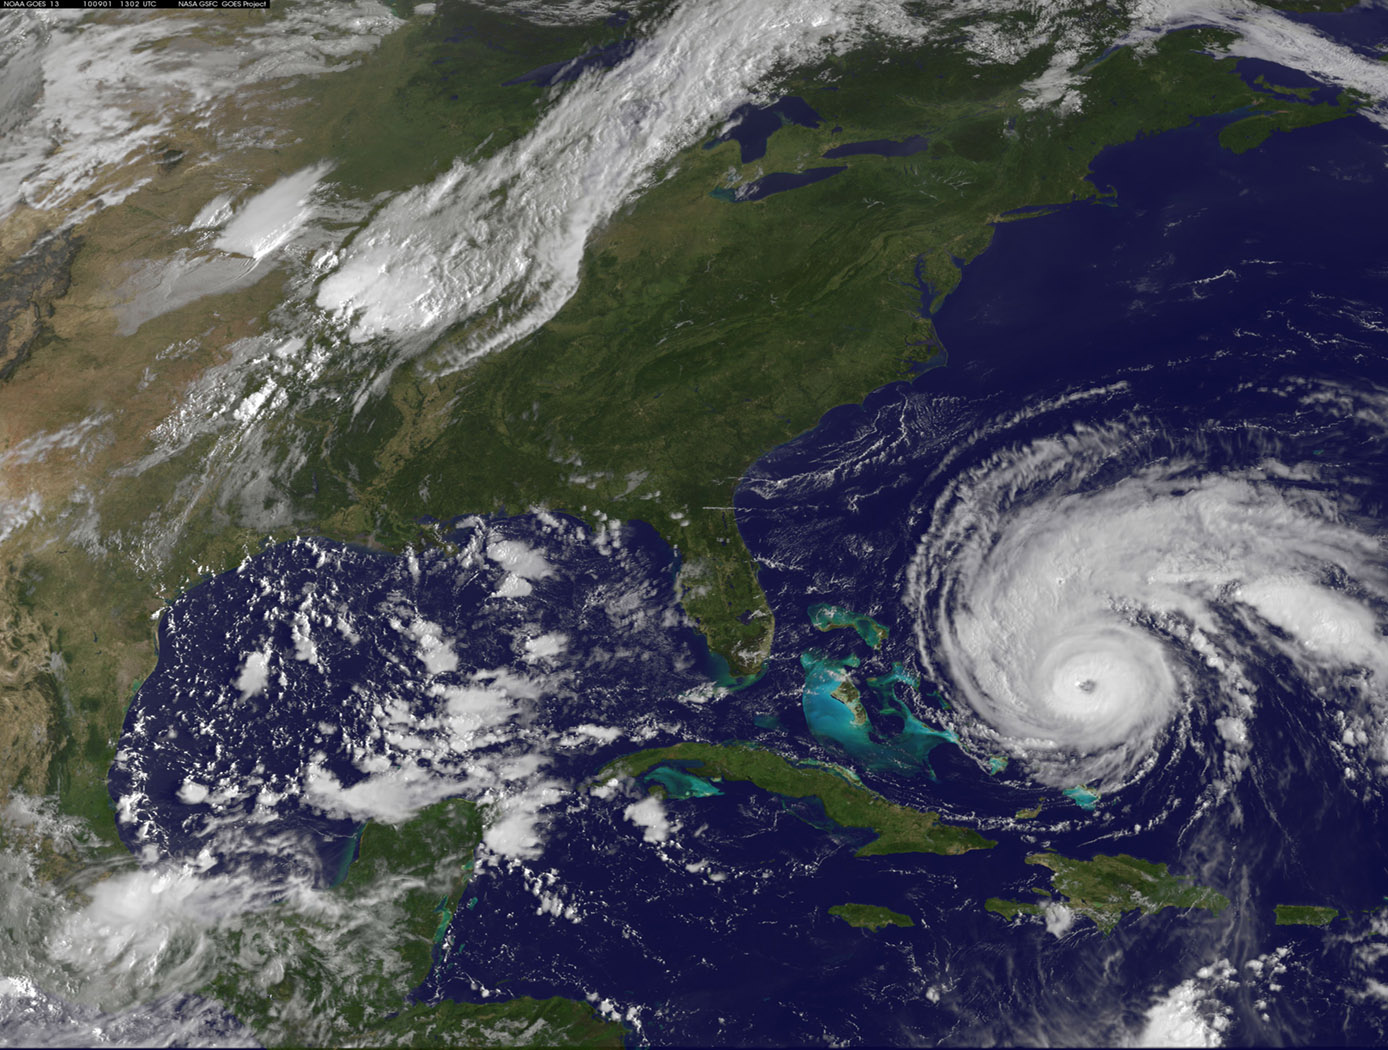 NASA GOES 13 satellite image showing the US east coast and Hurricane Earl on September 1, 2010 13:10 UTC.